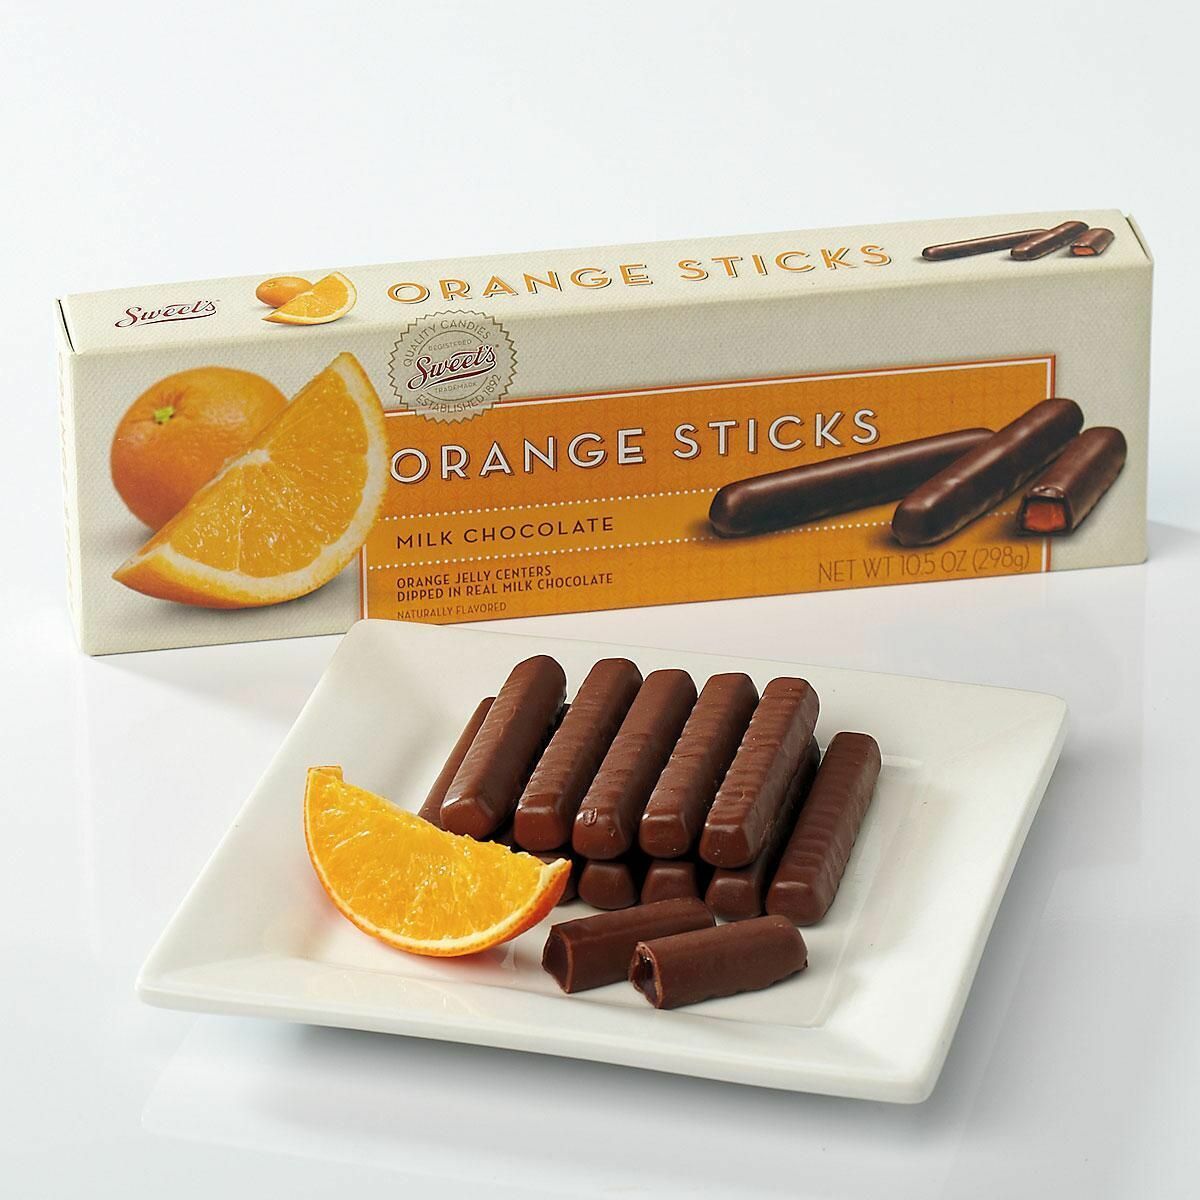 Sweet's Milk Chocolate Orange Sticks - 10.5 oz box